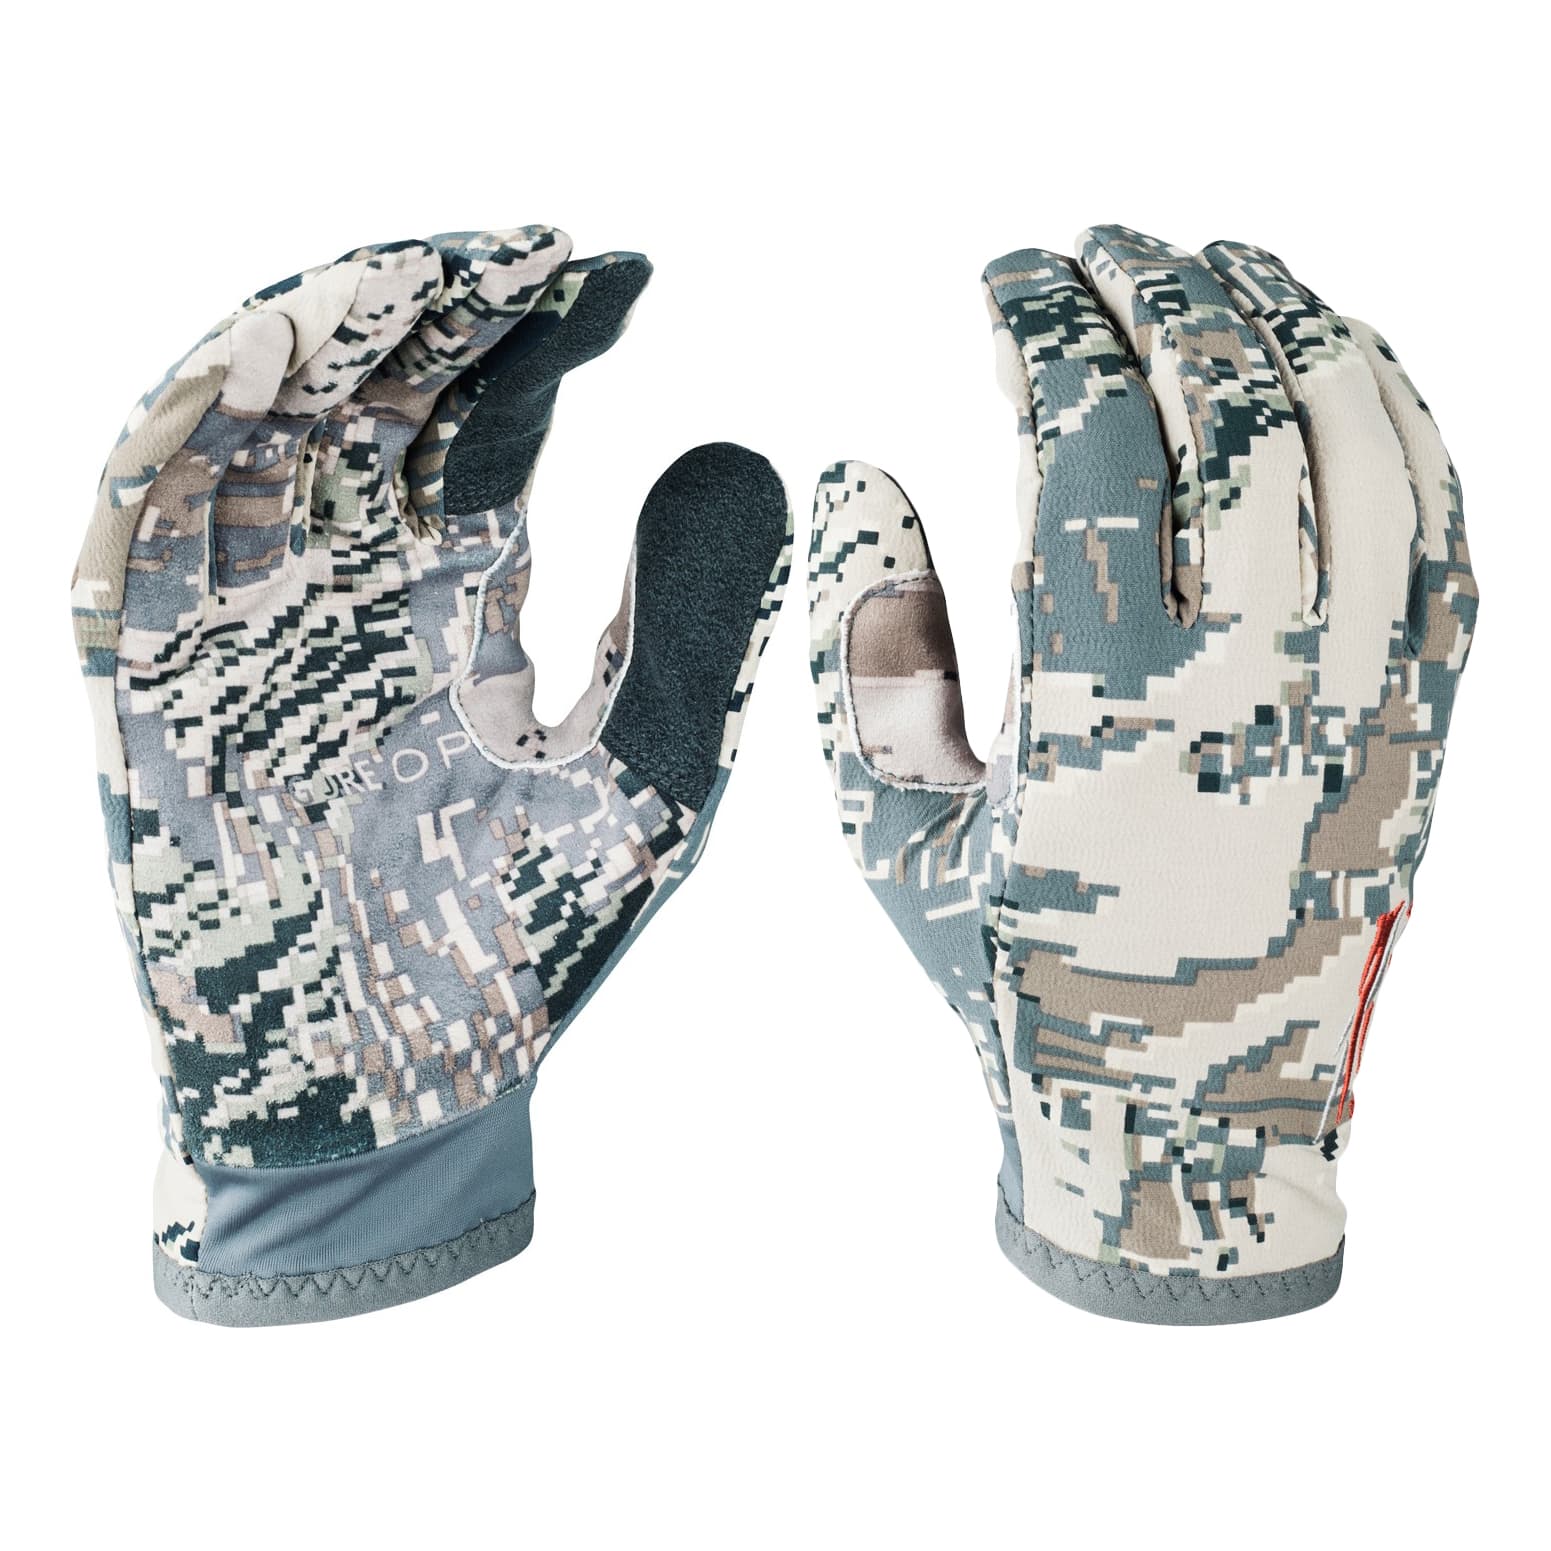 Sitka® Ascent Glove